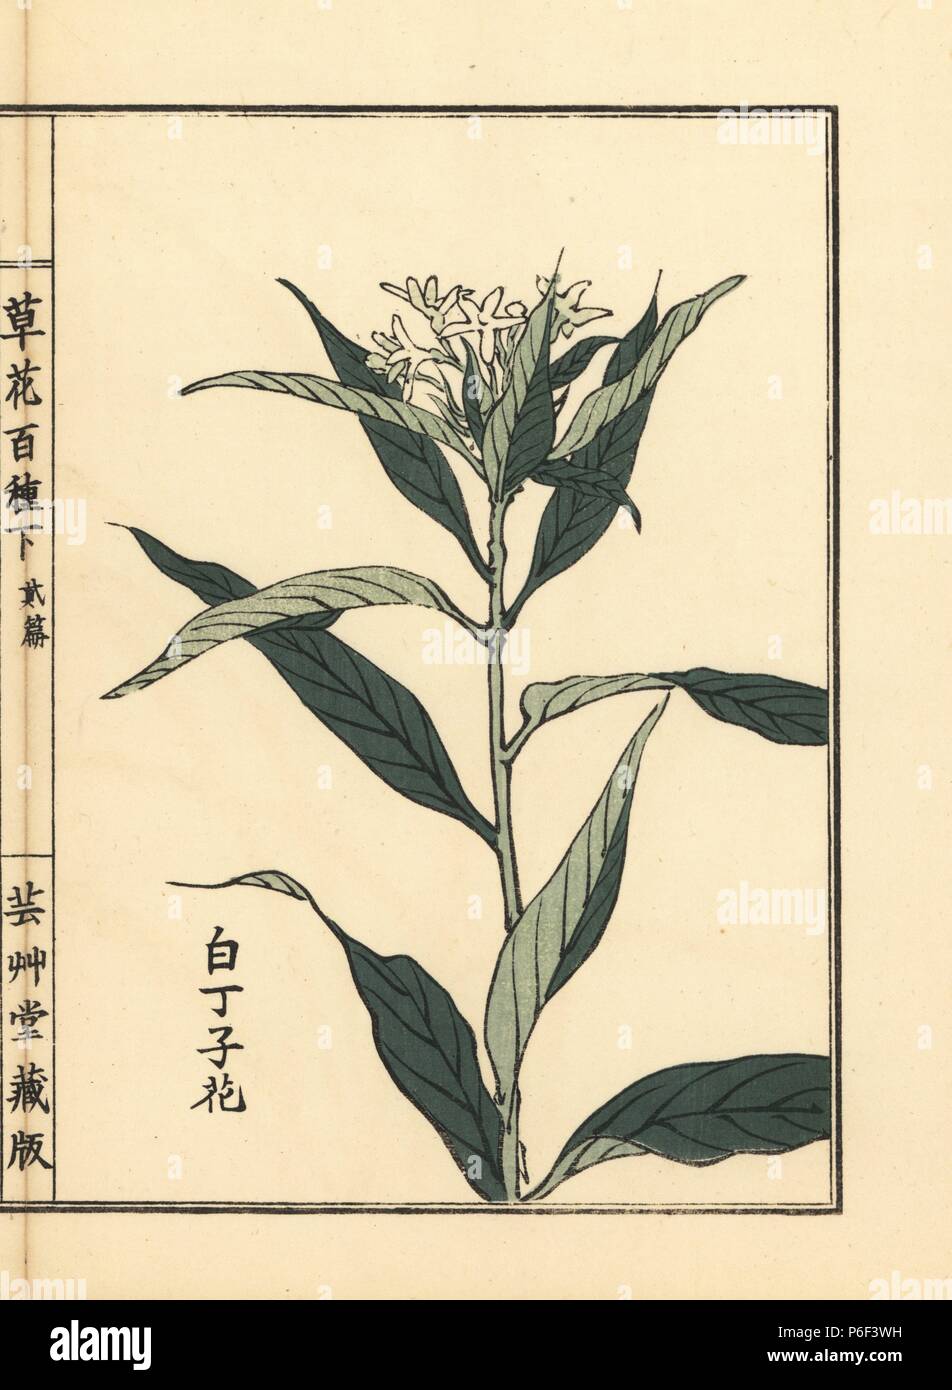 Shiro choujisou or white bluestar, Amsonia elliptica. Handcoloured woodblock print by Kono Bairei from Kusa Bana Hyakushu (One Hundred Varieties of Flowers), Tokyo, Yamada, 1901. Stock Photo